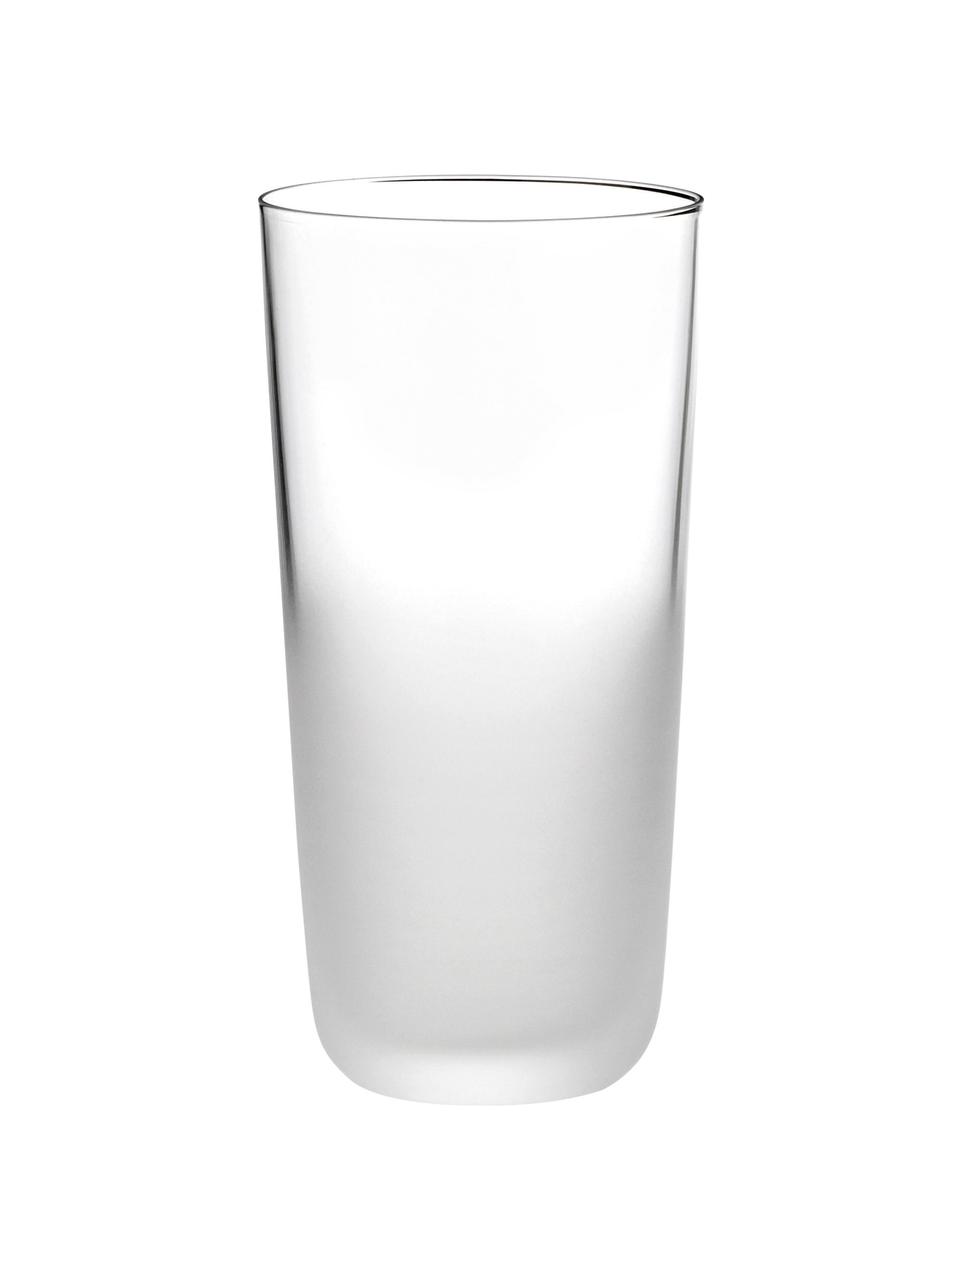 Bicchiere acqua in vetro semi trasparente Frost 2 pz, Vetro, Trasparente, Ø 7 x Alt. 13 cm, 200 ml